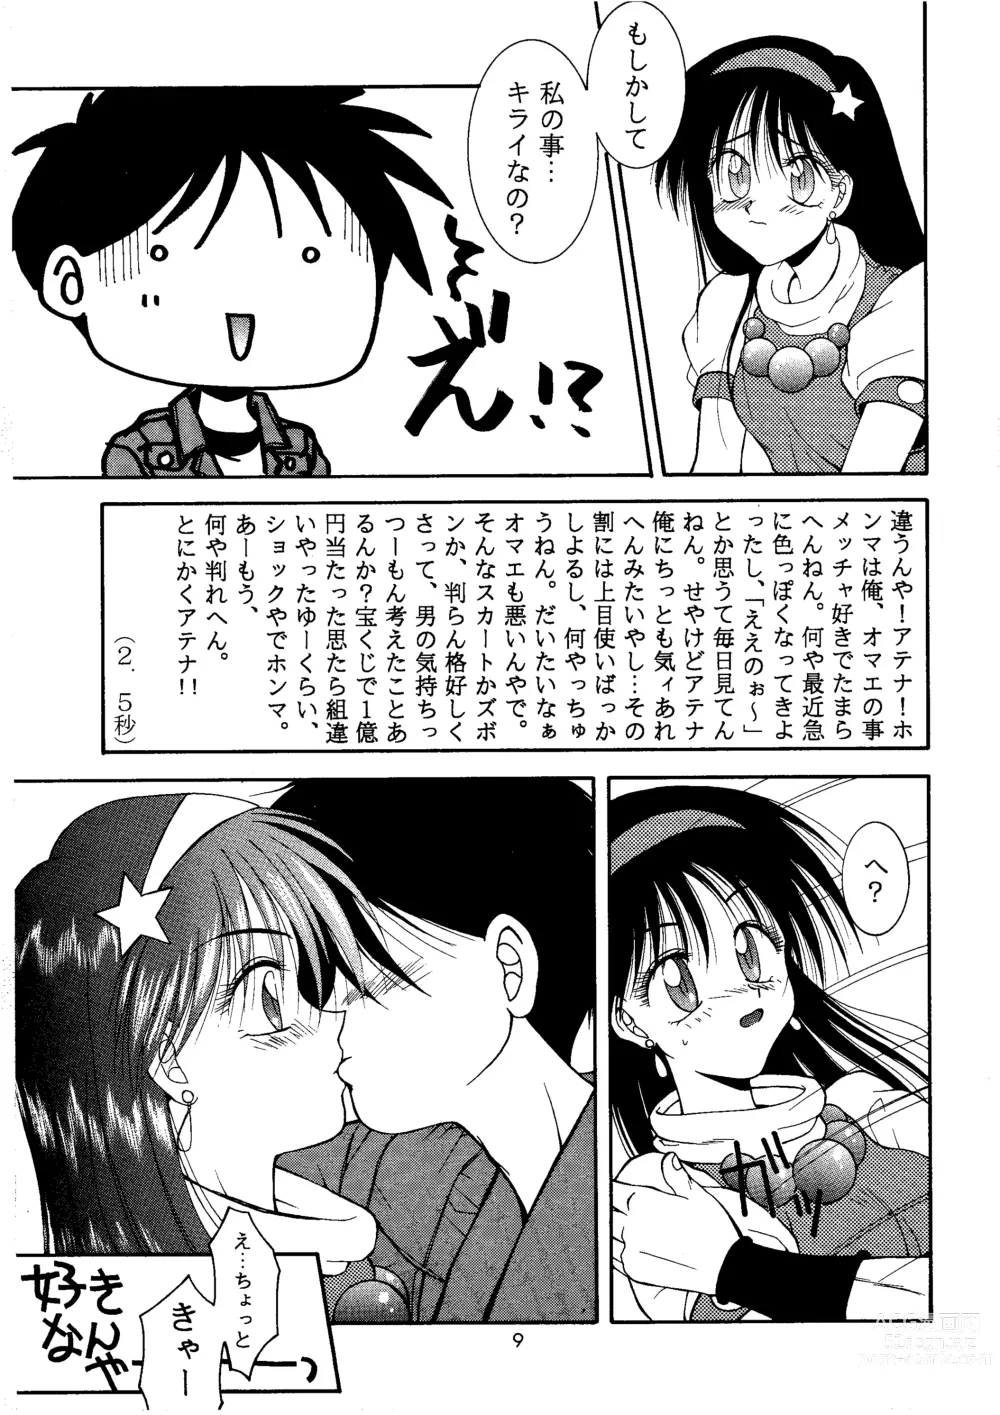 Page 9 of doujinshi Loveless